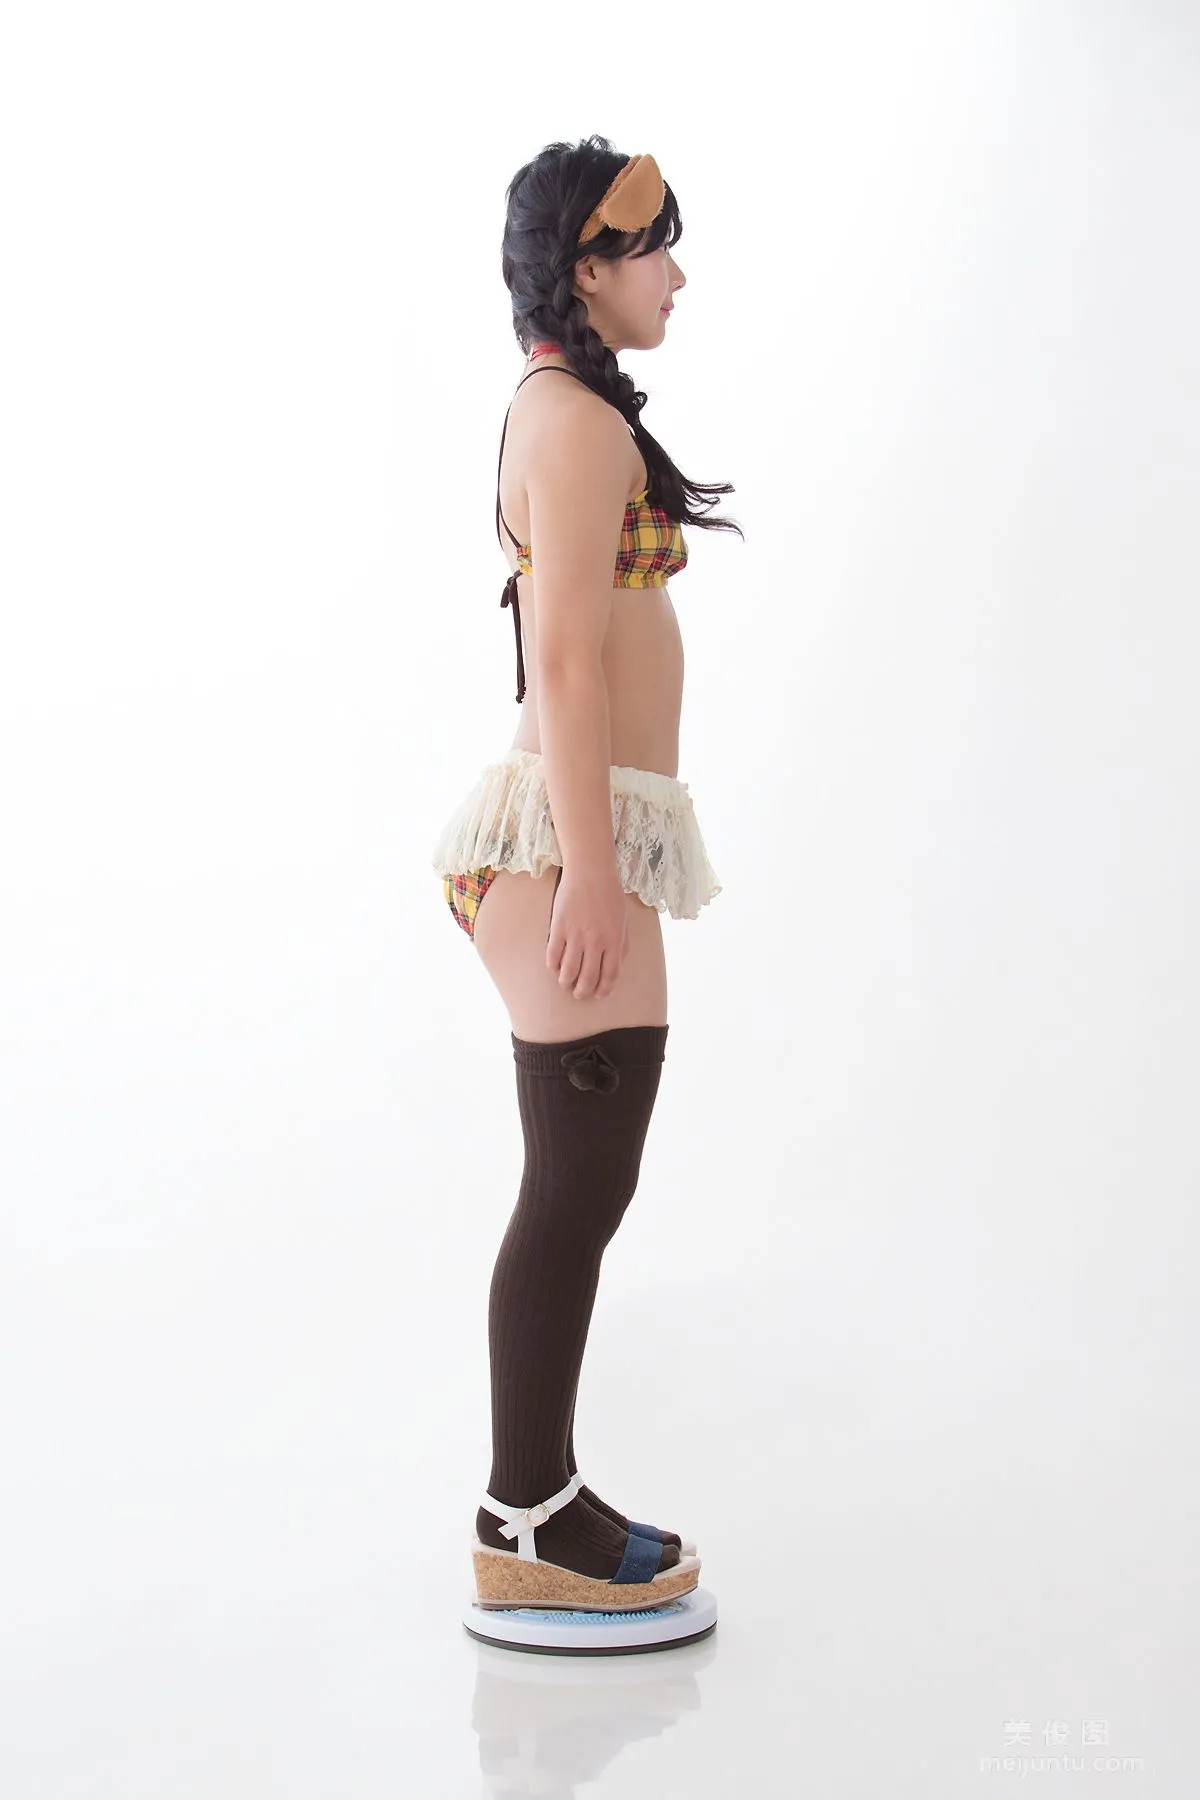 [Minisuka.tv] Saria Natsume 夏目咲莉愛 - Premium Gallery 2.5 写真套图7